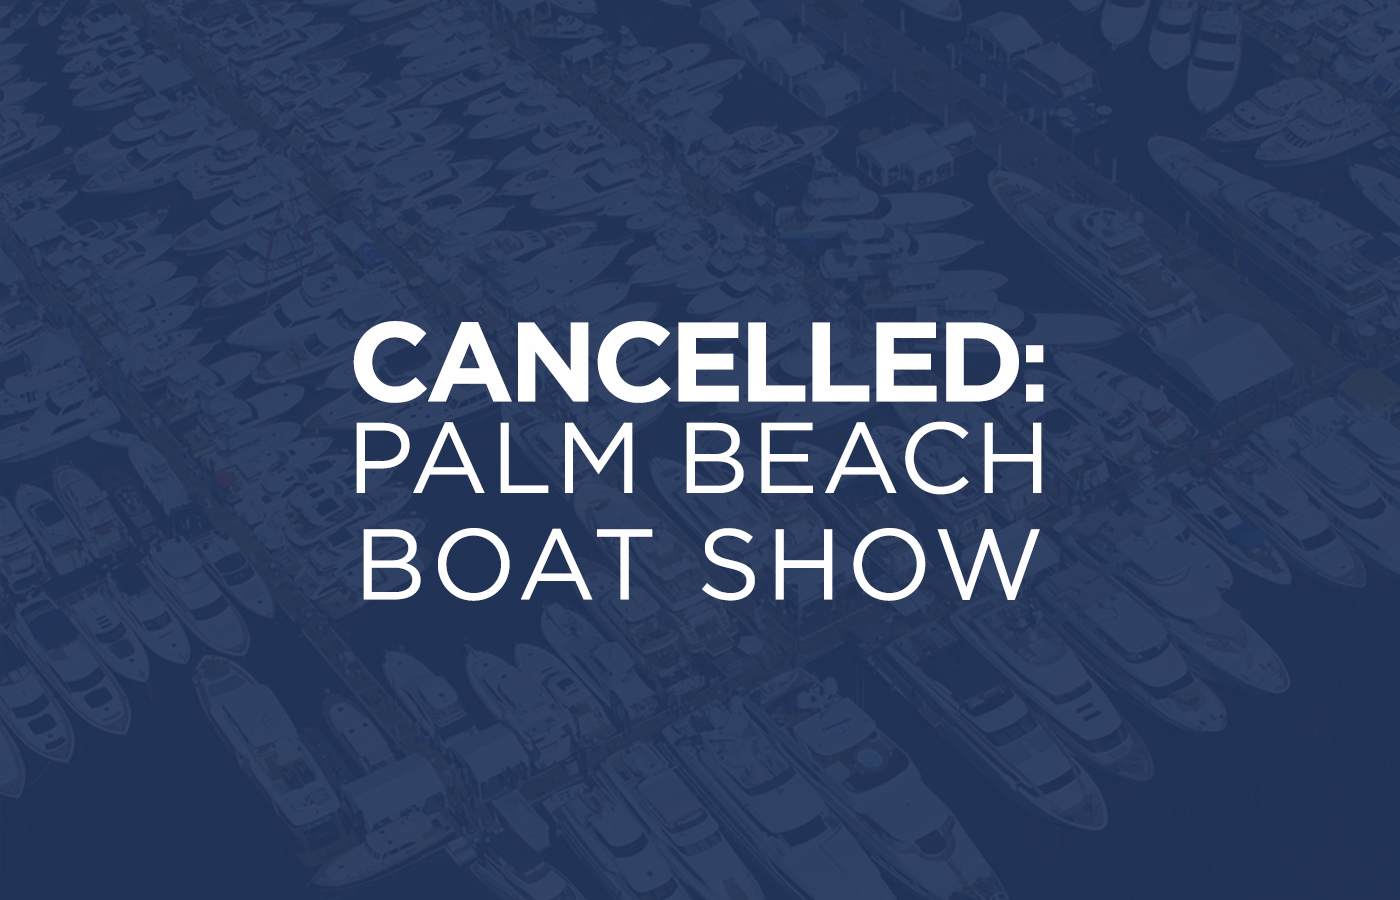 Palm Beach Boat Show Cancelled Due To Coronavirus